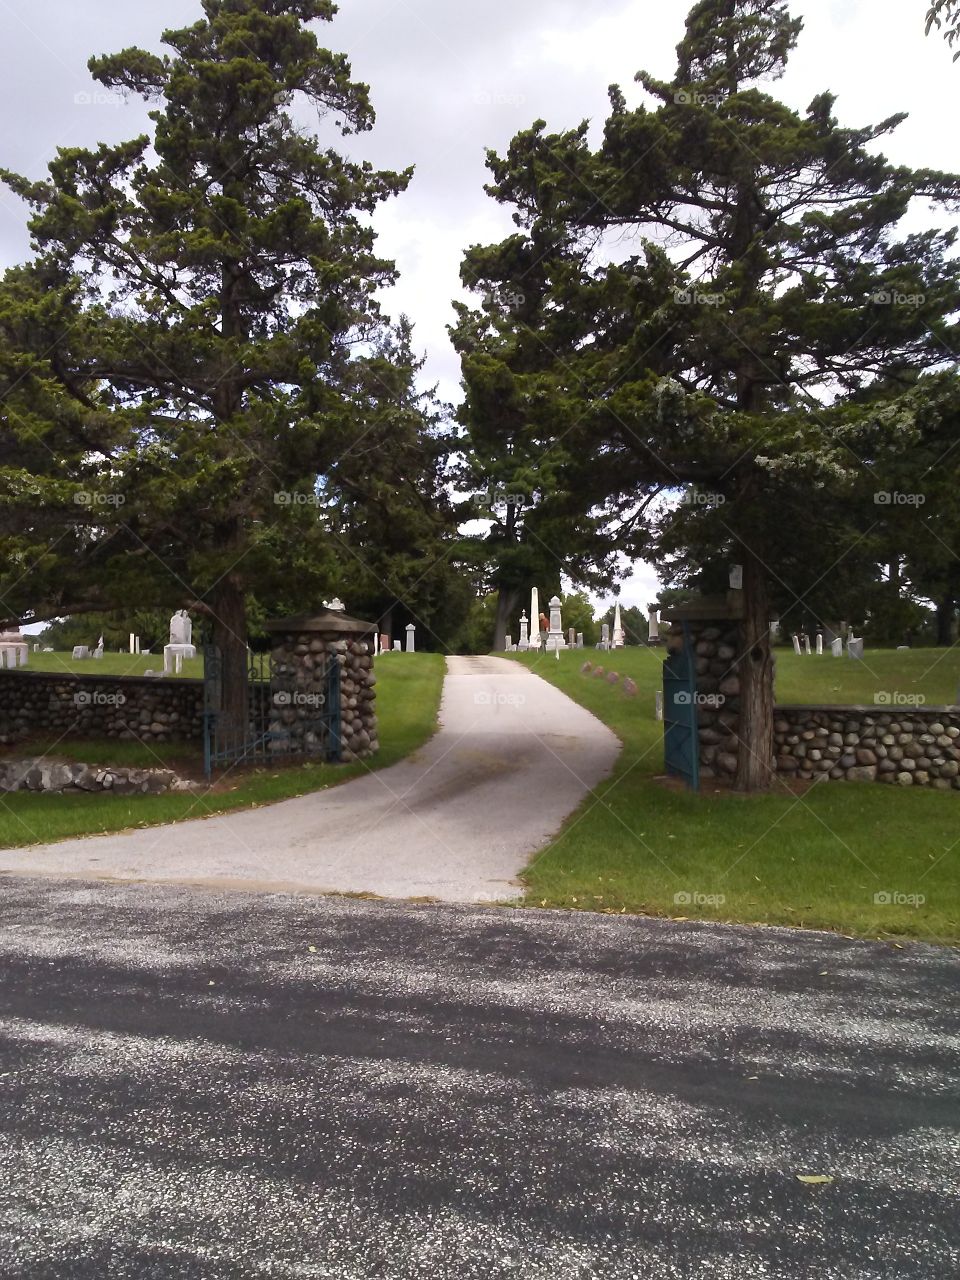 Entrance into Greenbush cemetery.